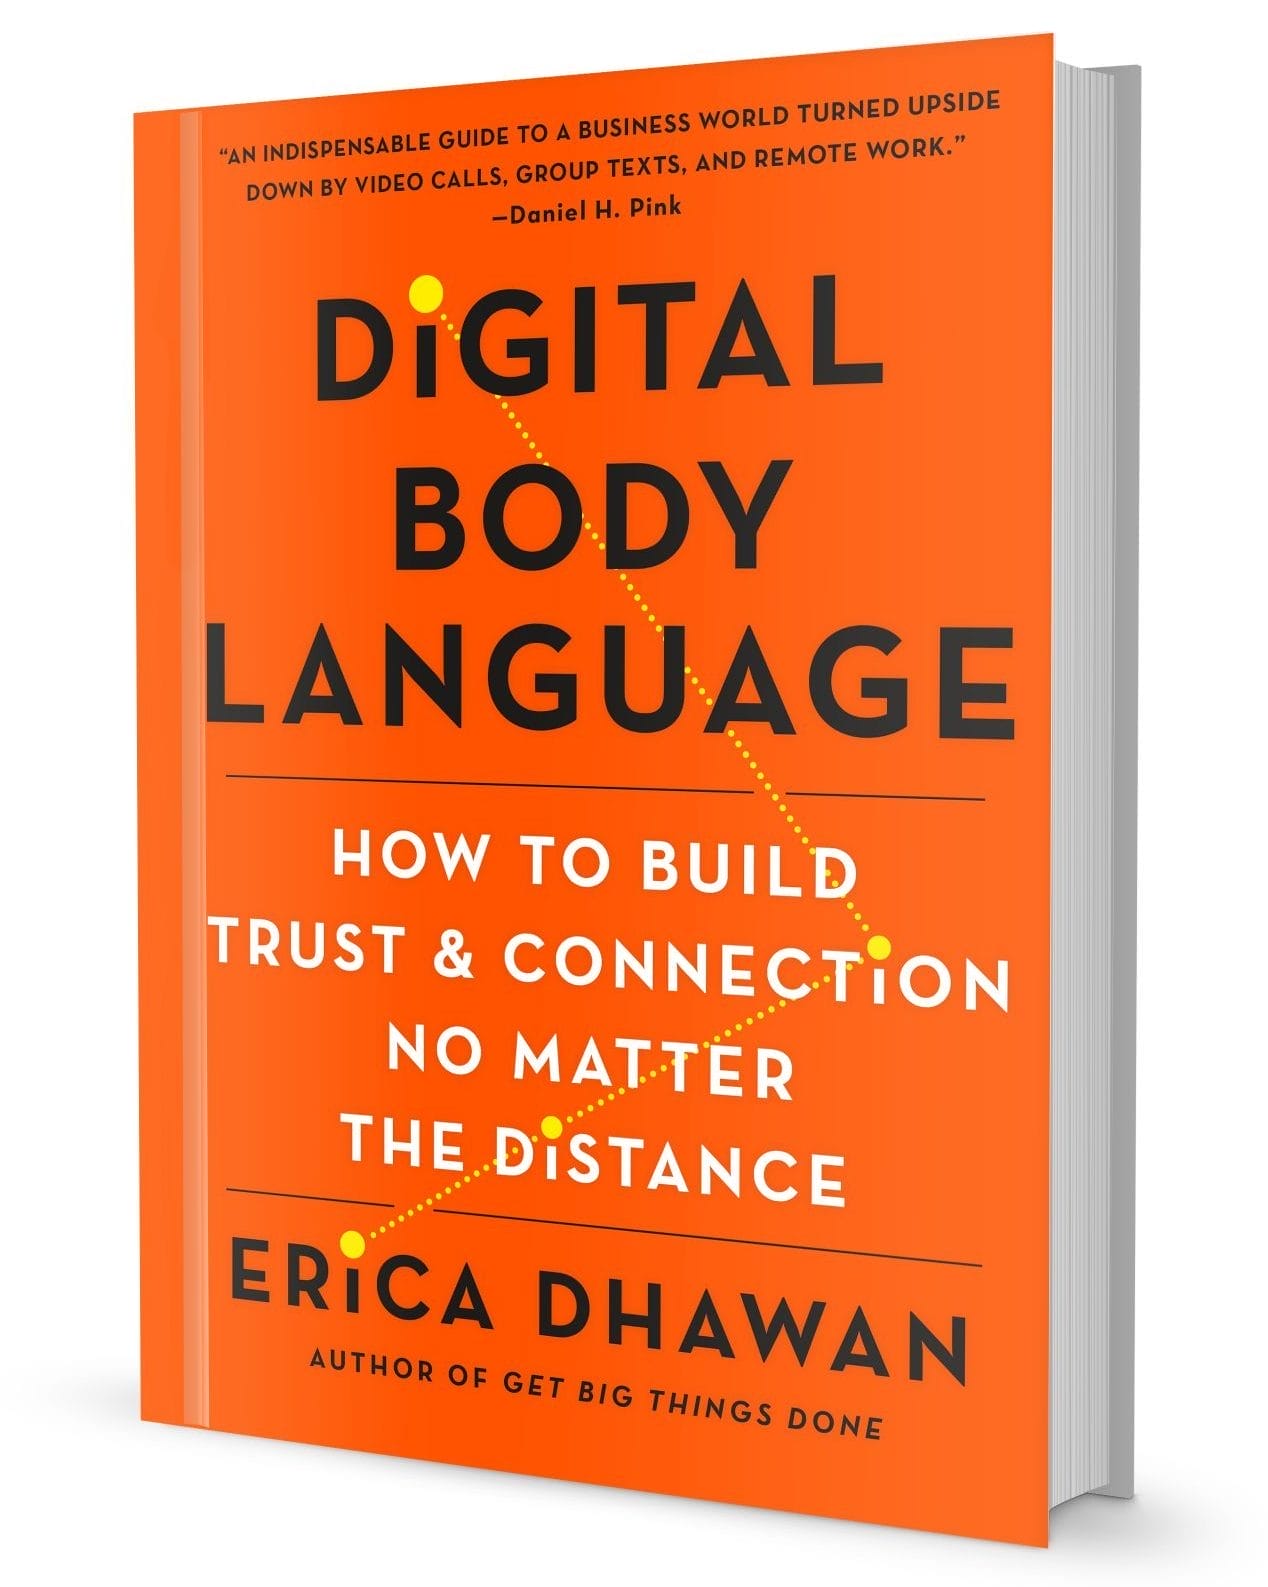 The book Digital Body Language